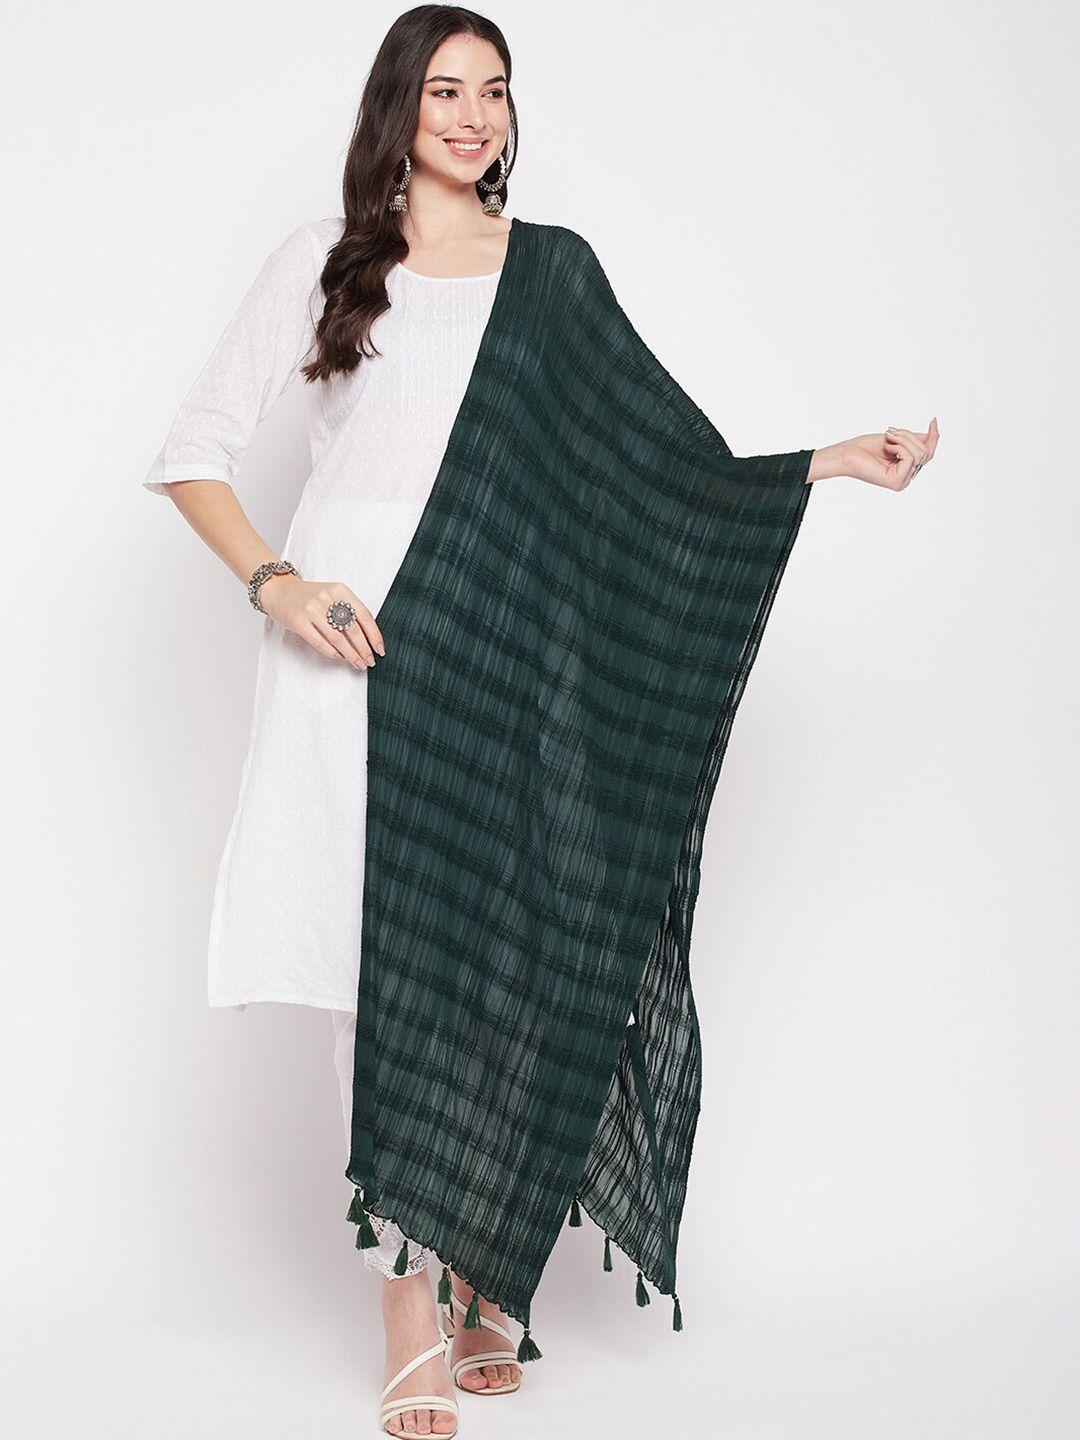 clora creation green striped woven design cotton dupatta